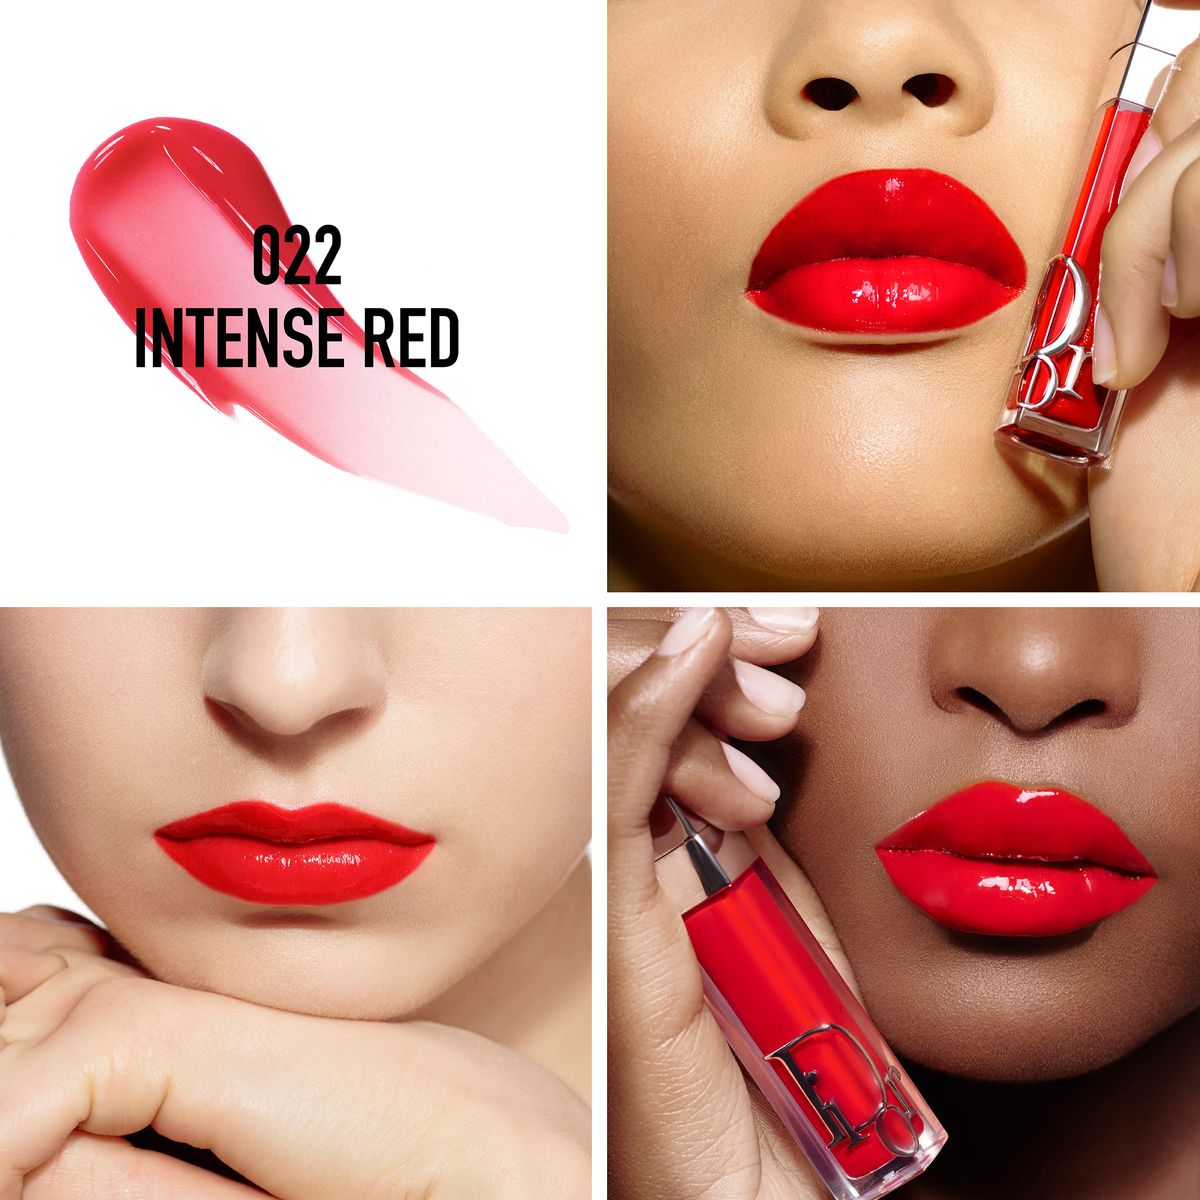 dior-addict-lip-maximizer-022-intense-red-03